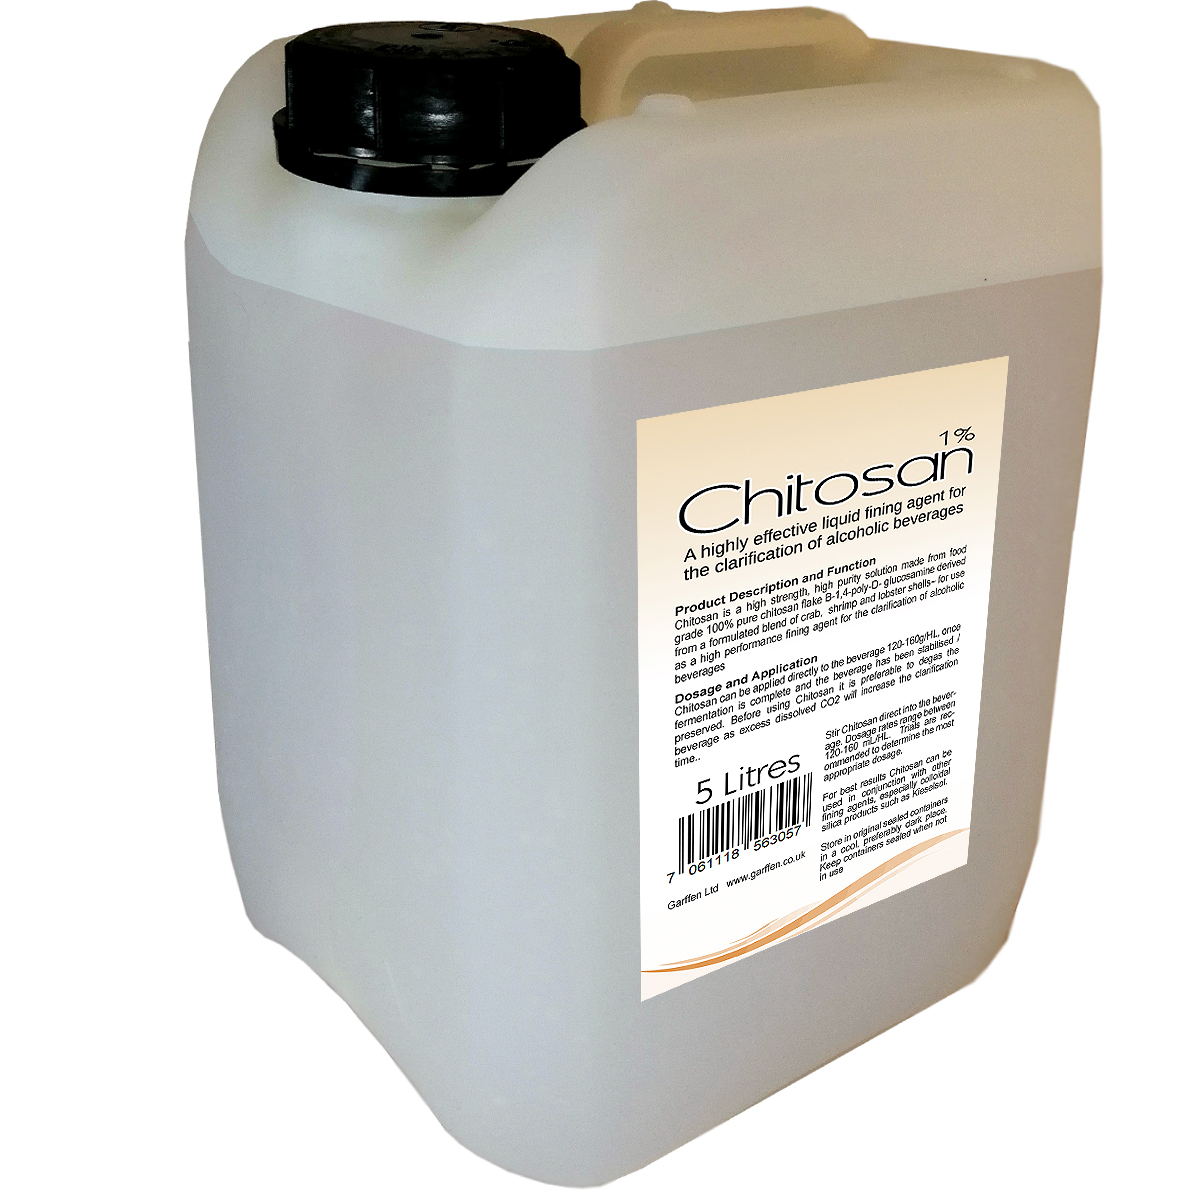 Chitosan 5 litre liquid